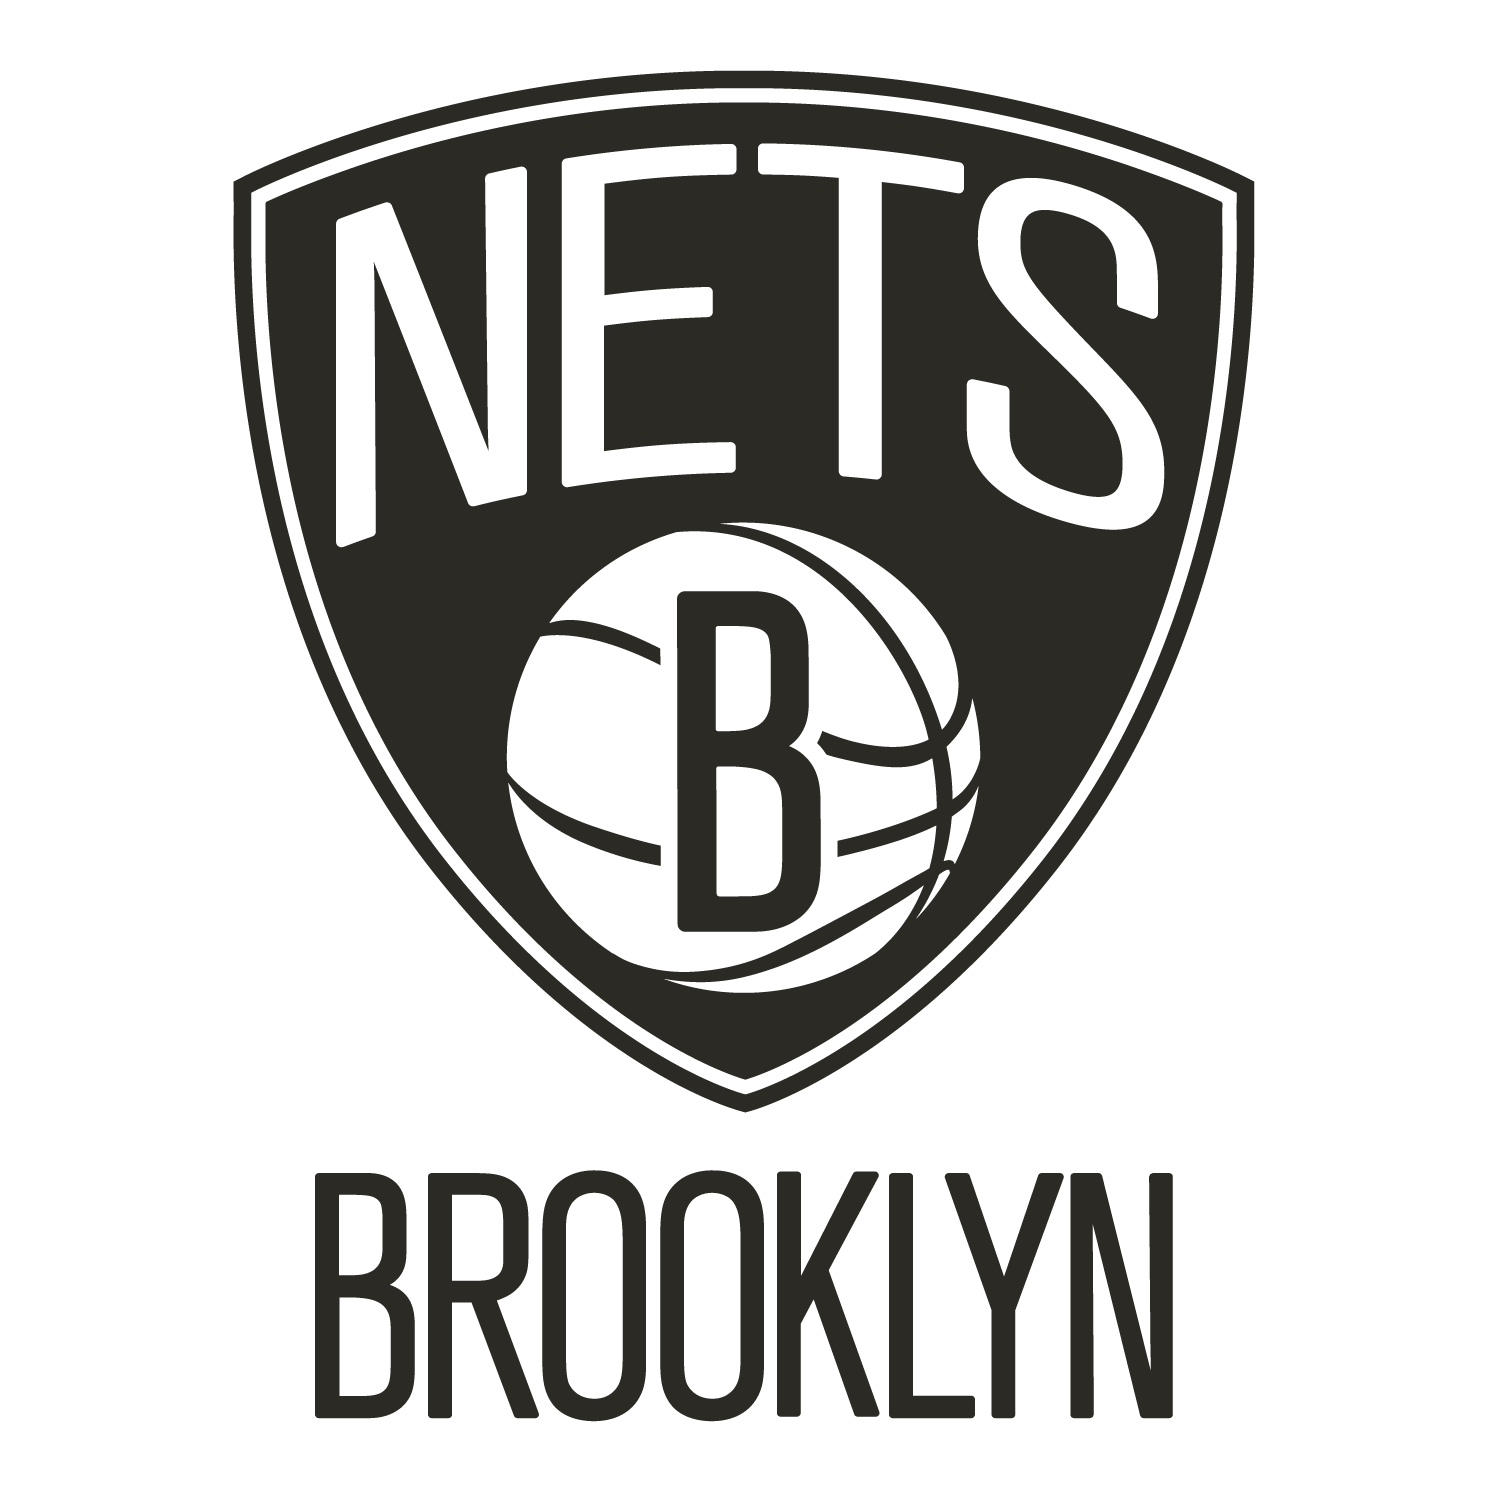 Shop Brooklyn Nets products